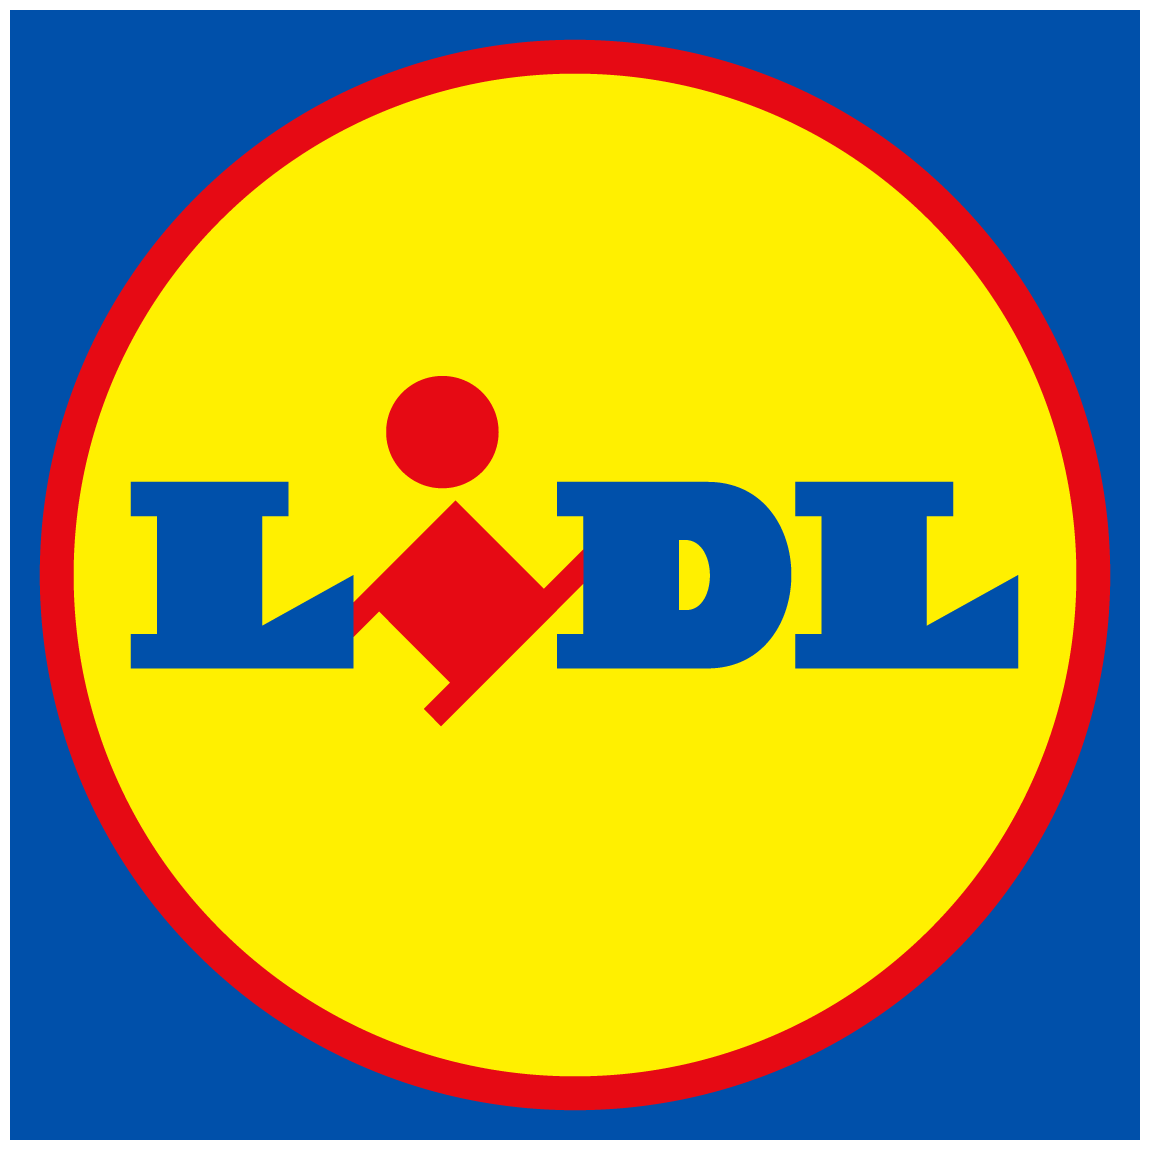 Lidl Logo Basis 1150x1150px Rgb 72dpi.png